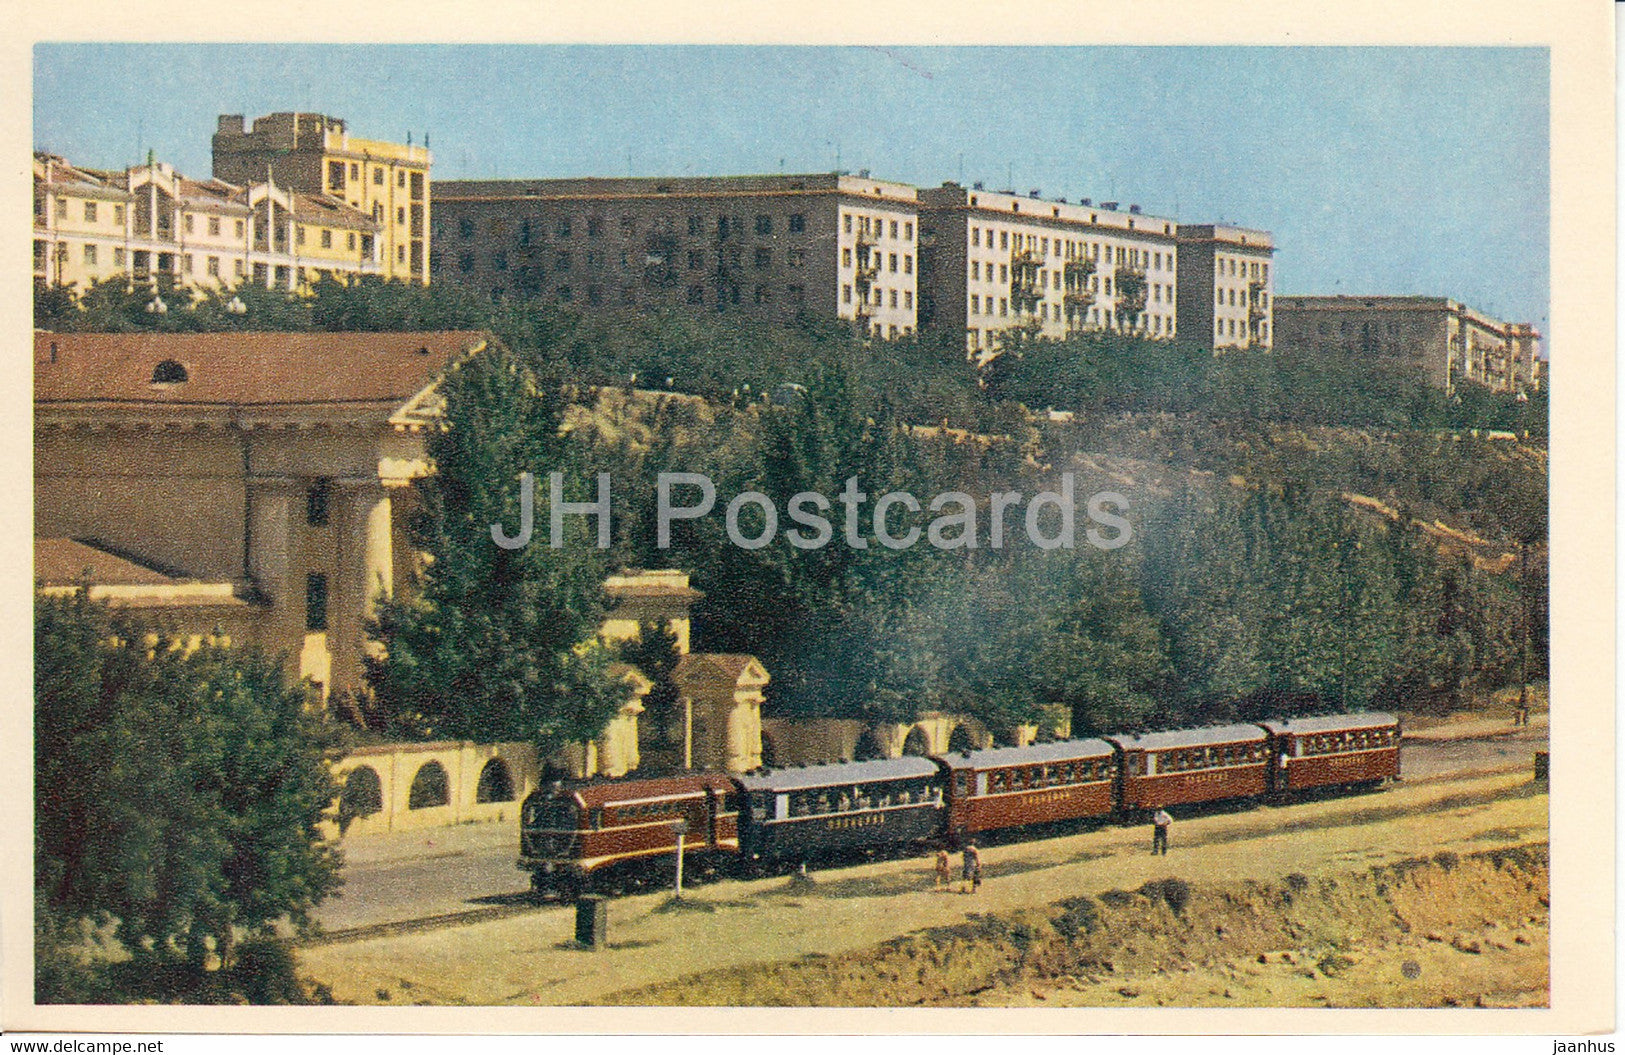 Volgograd - Children's Railway - train - Russia USSR - unused - JH Postcards